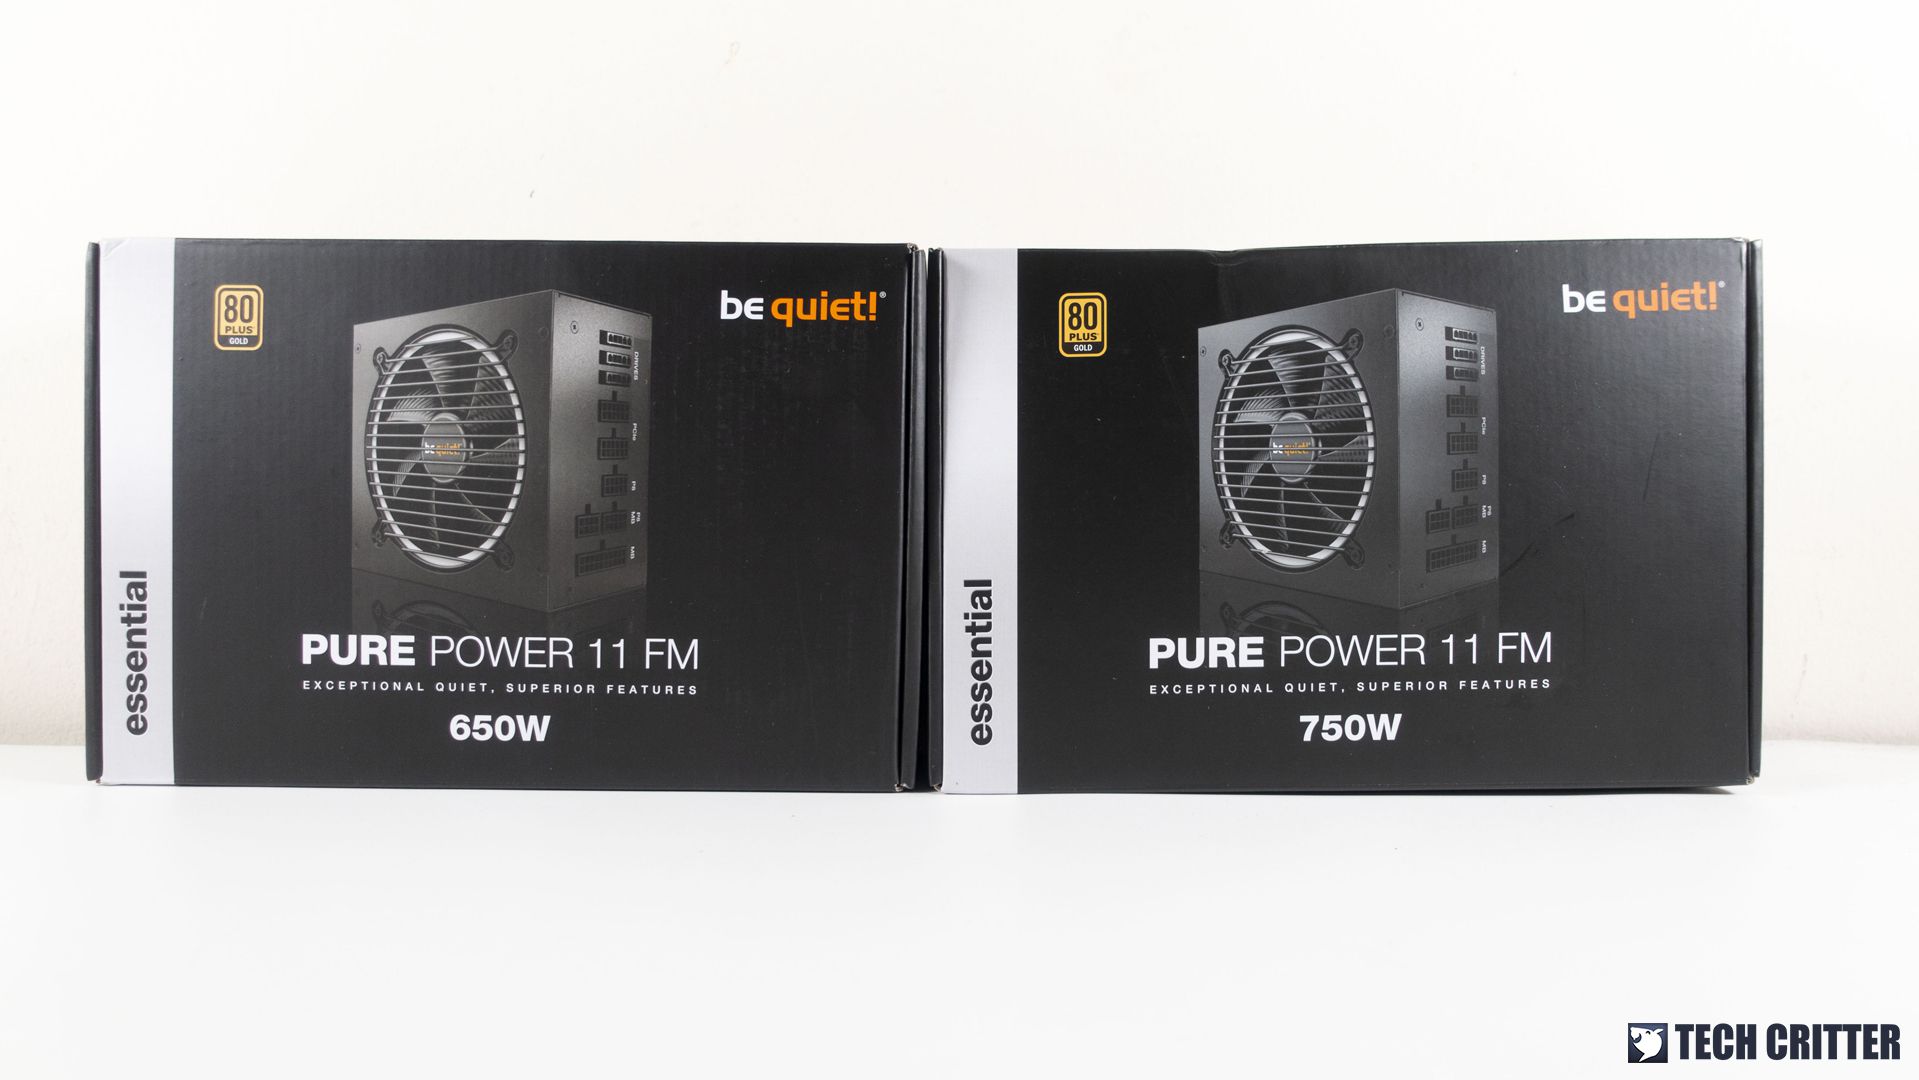 be quiet! Pure Power 11 FM 750W Power Supply Unit Review